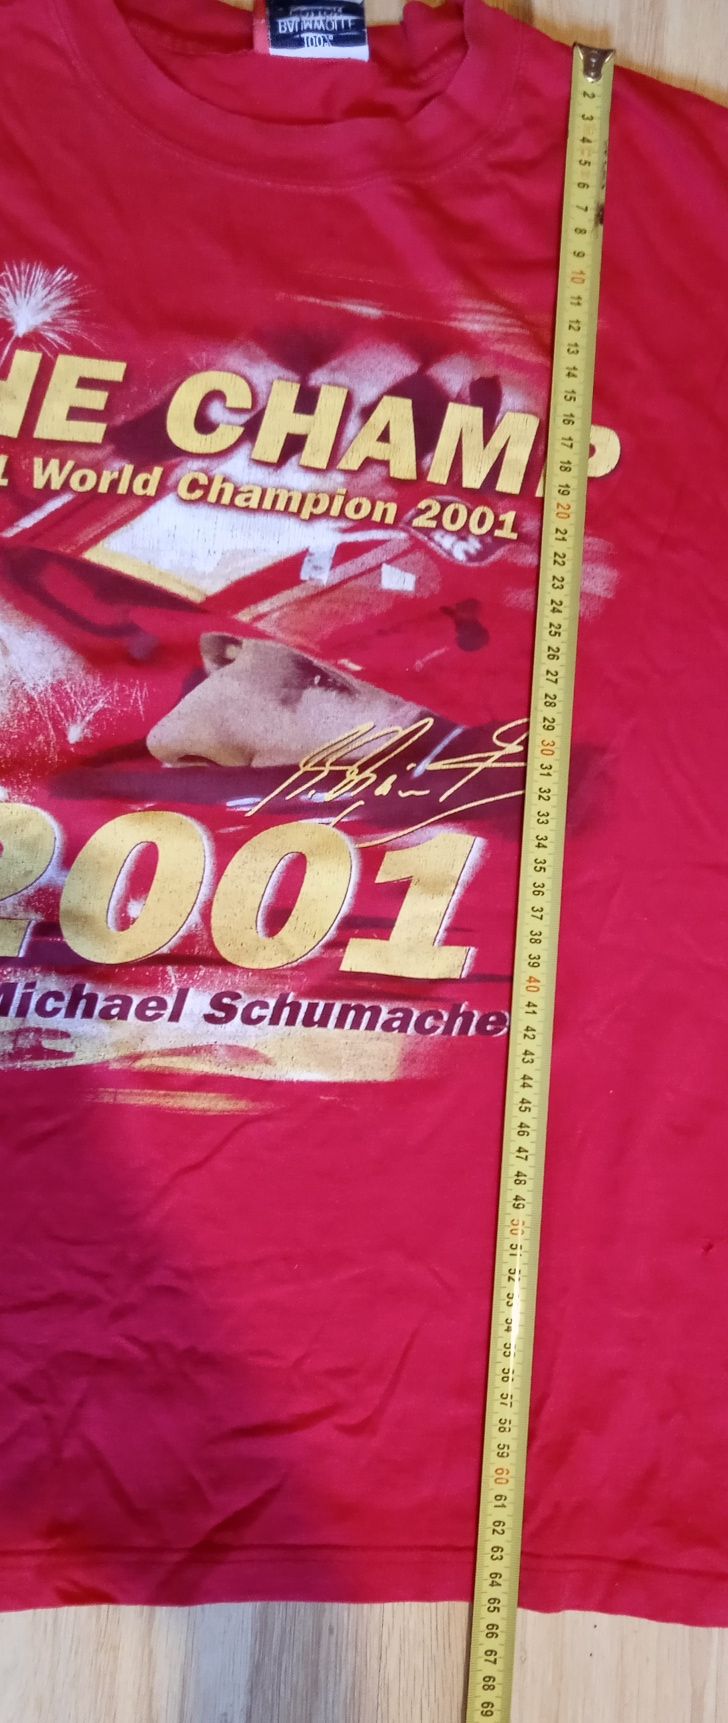 Michael Schumacher F1 World Champion 2001, t-shirt XL